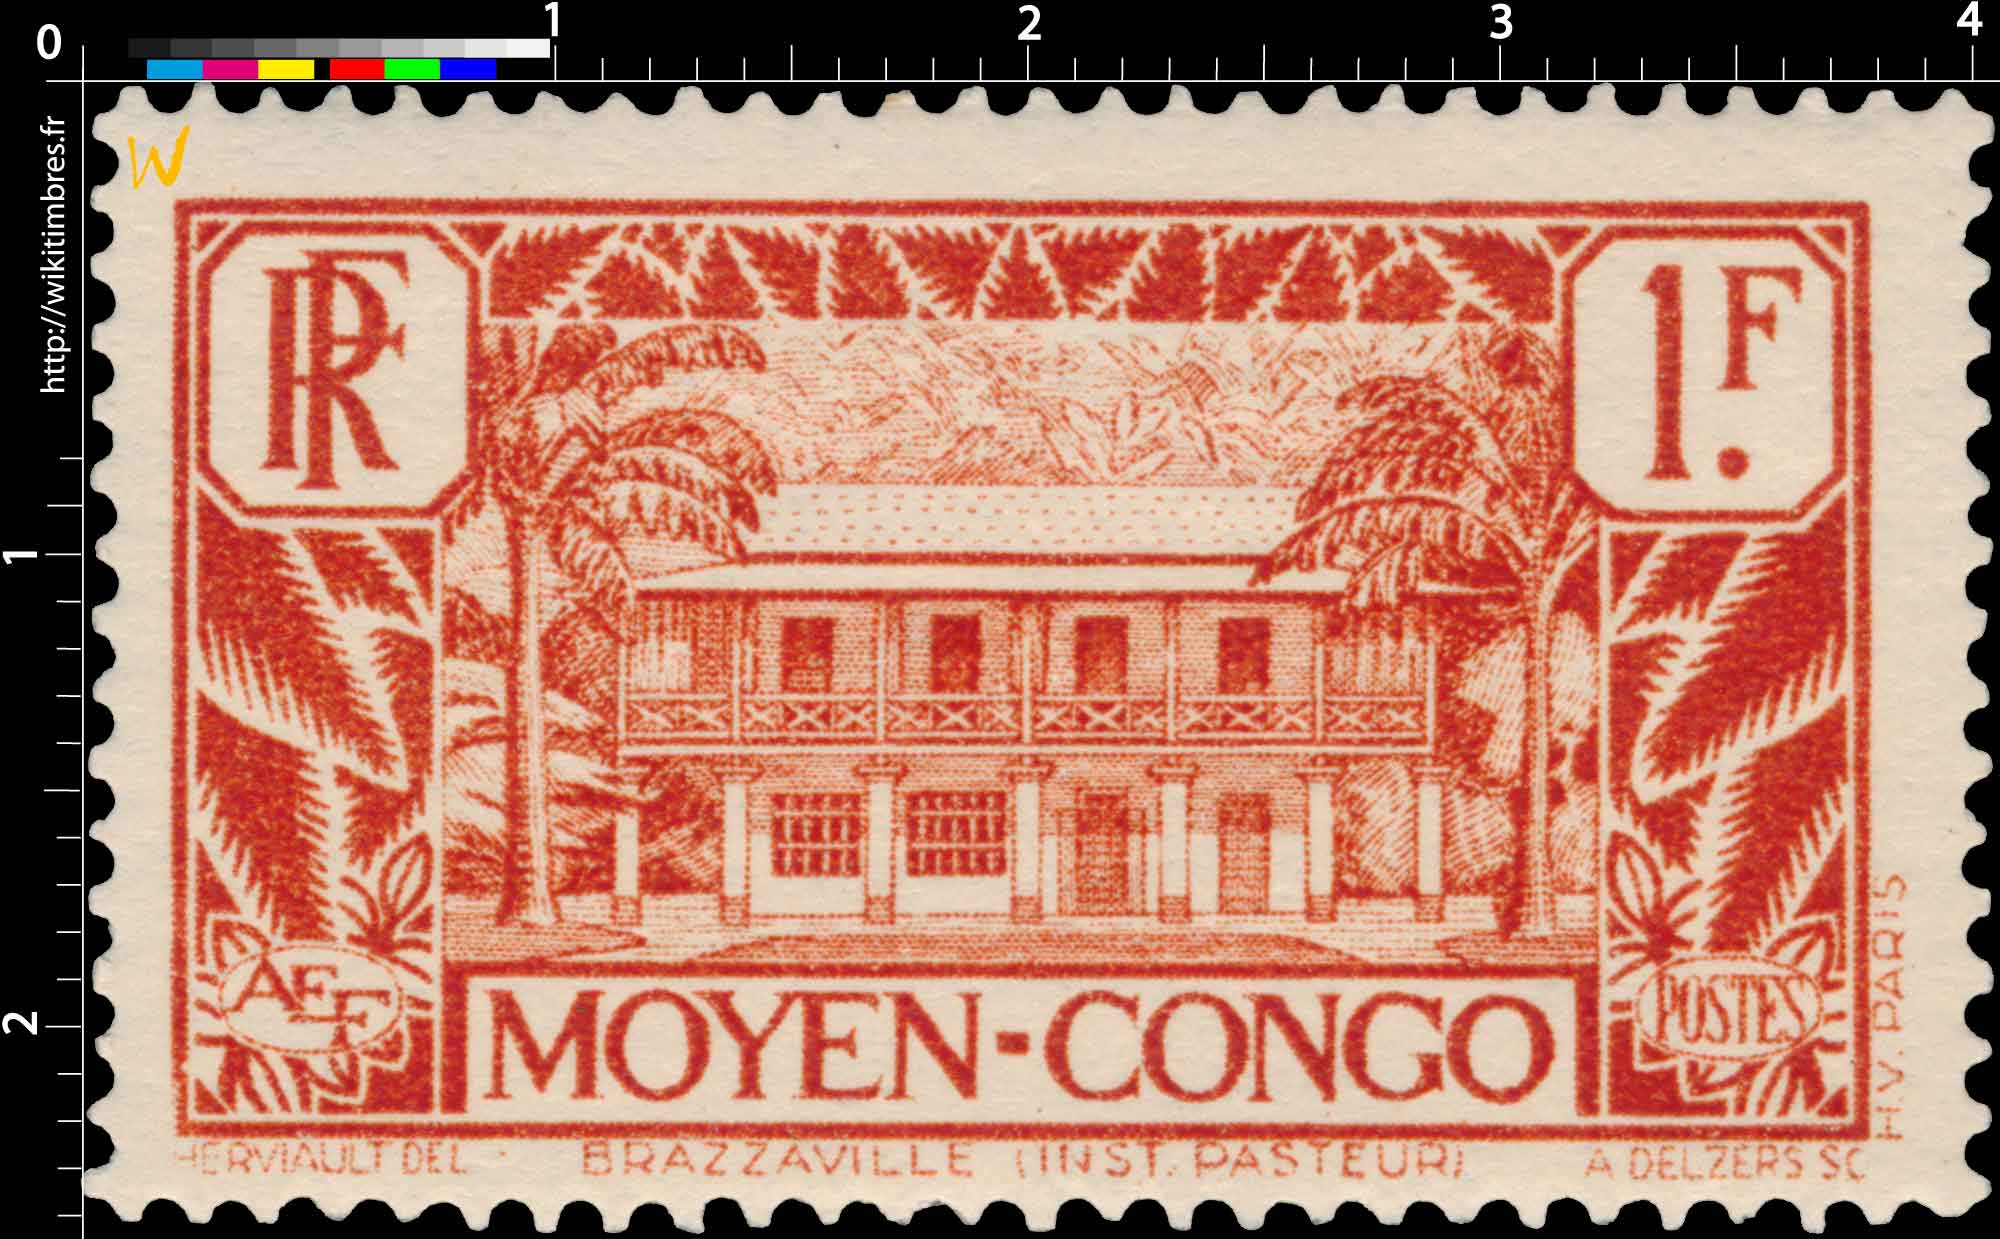 Moyen Congo - Institut Pasteur - Brazzaville